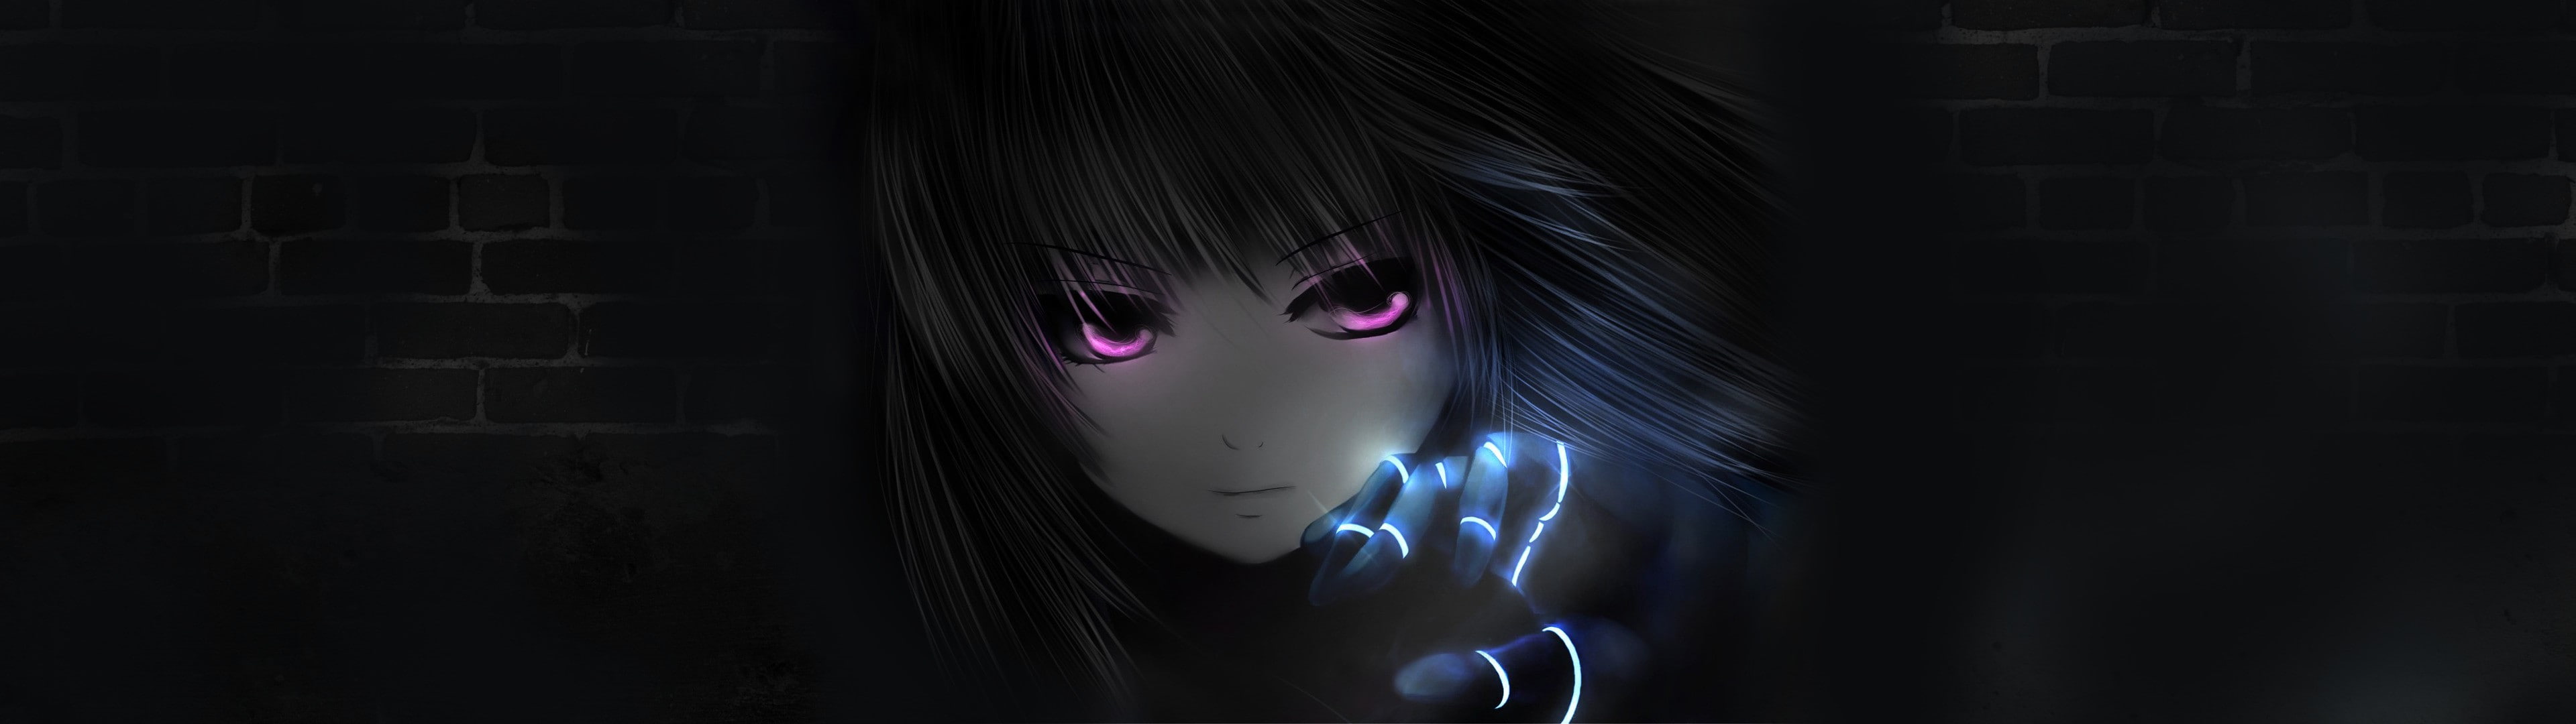 anime women glowing smoke purple eyes long hair dark hair bricks king of fighters kula diamond